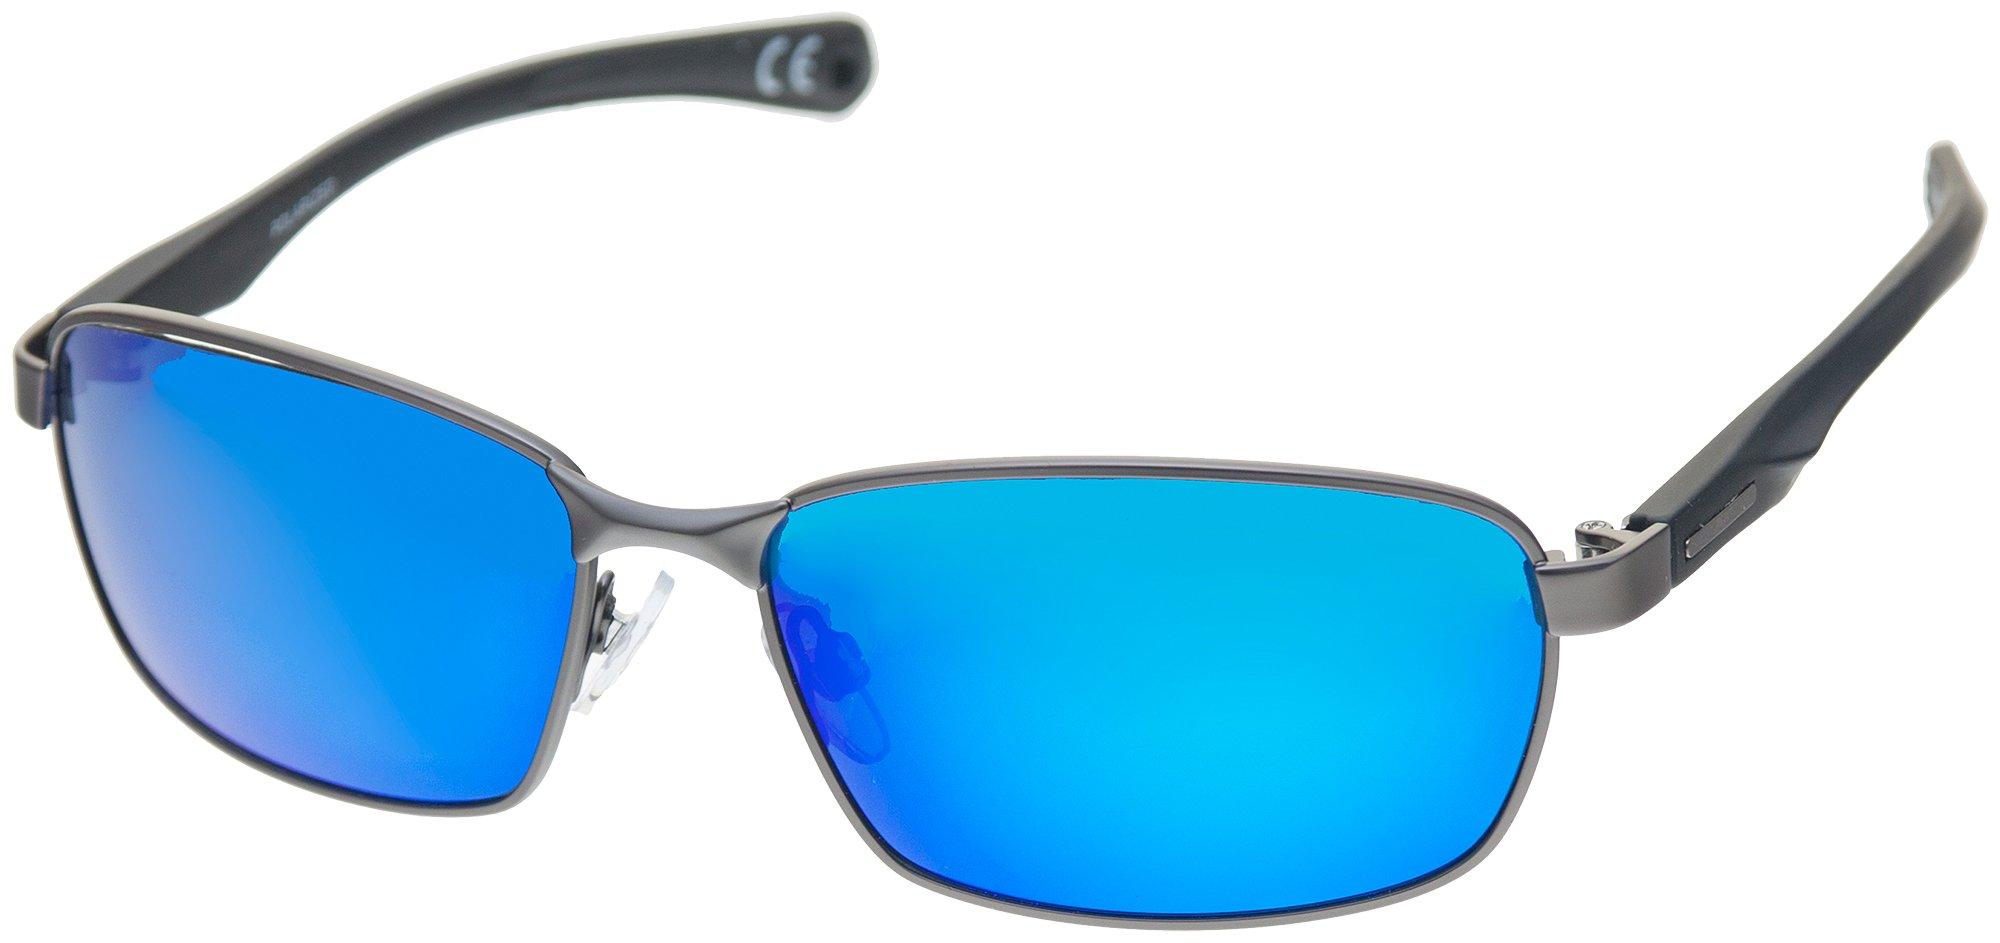 polarized wraparound sunglasses